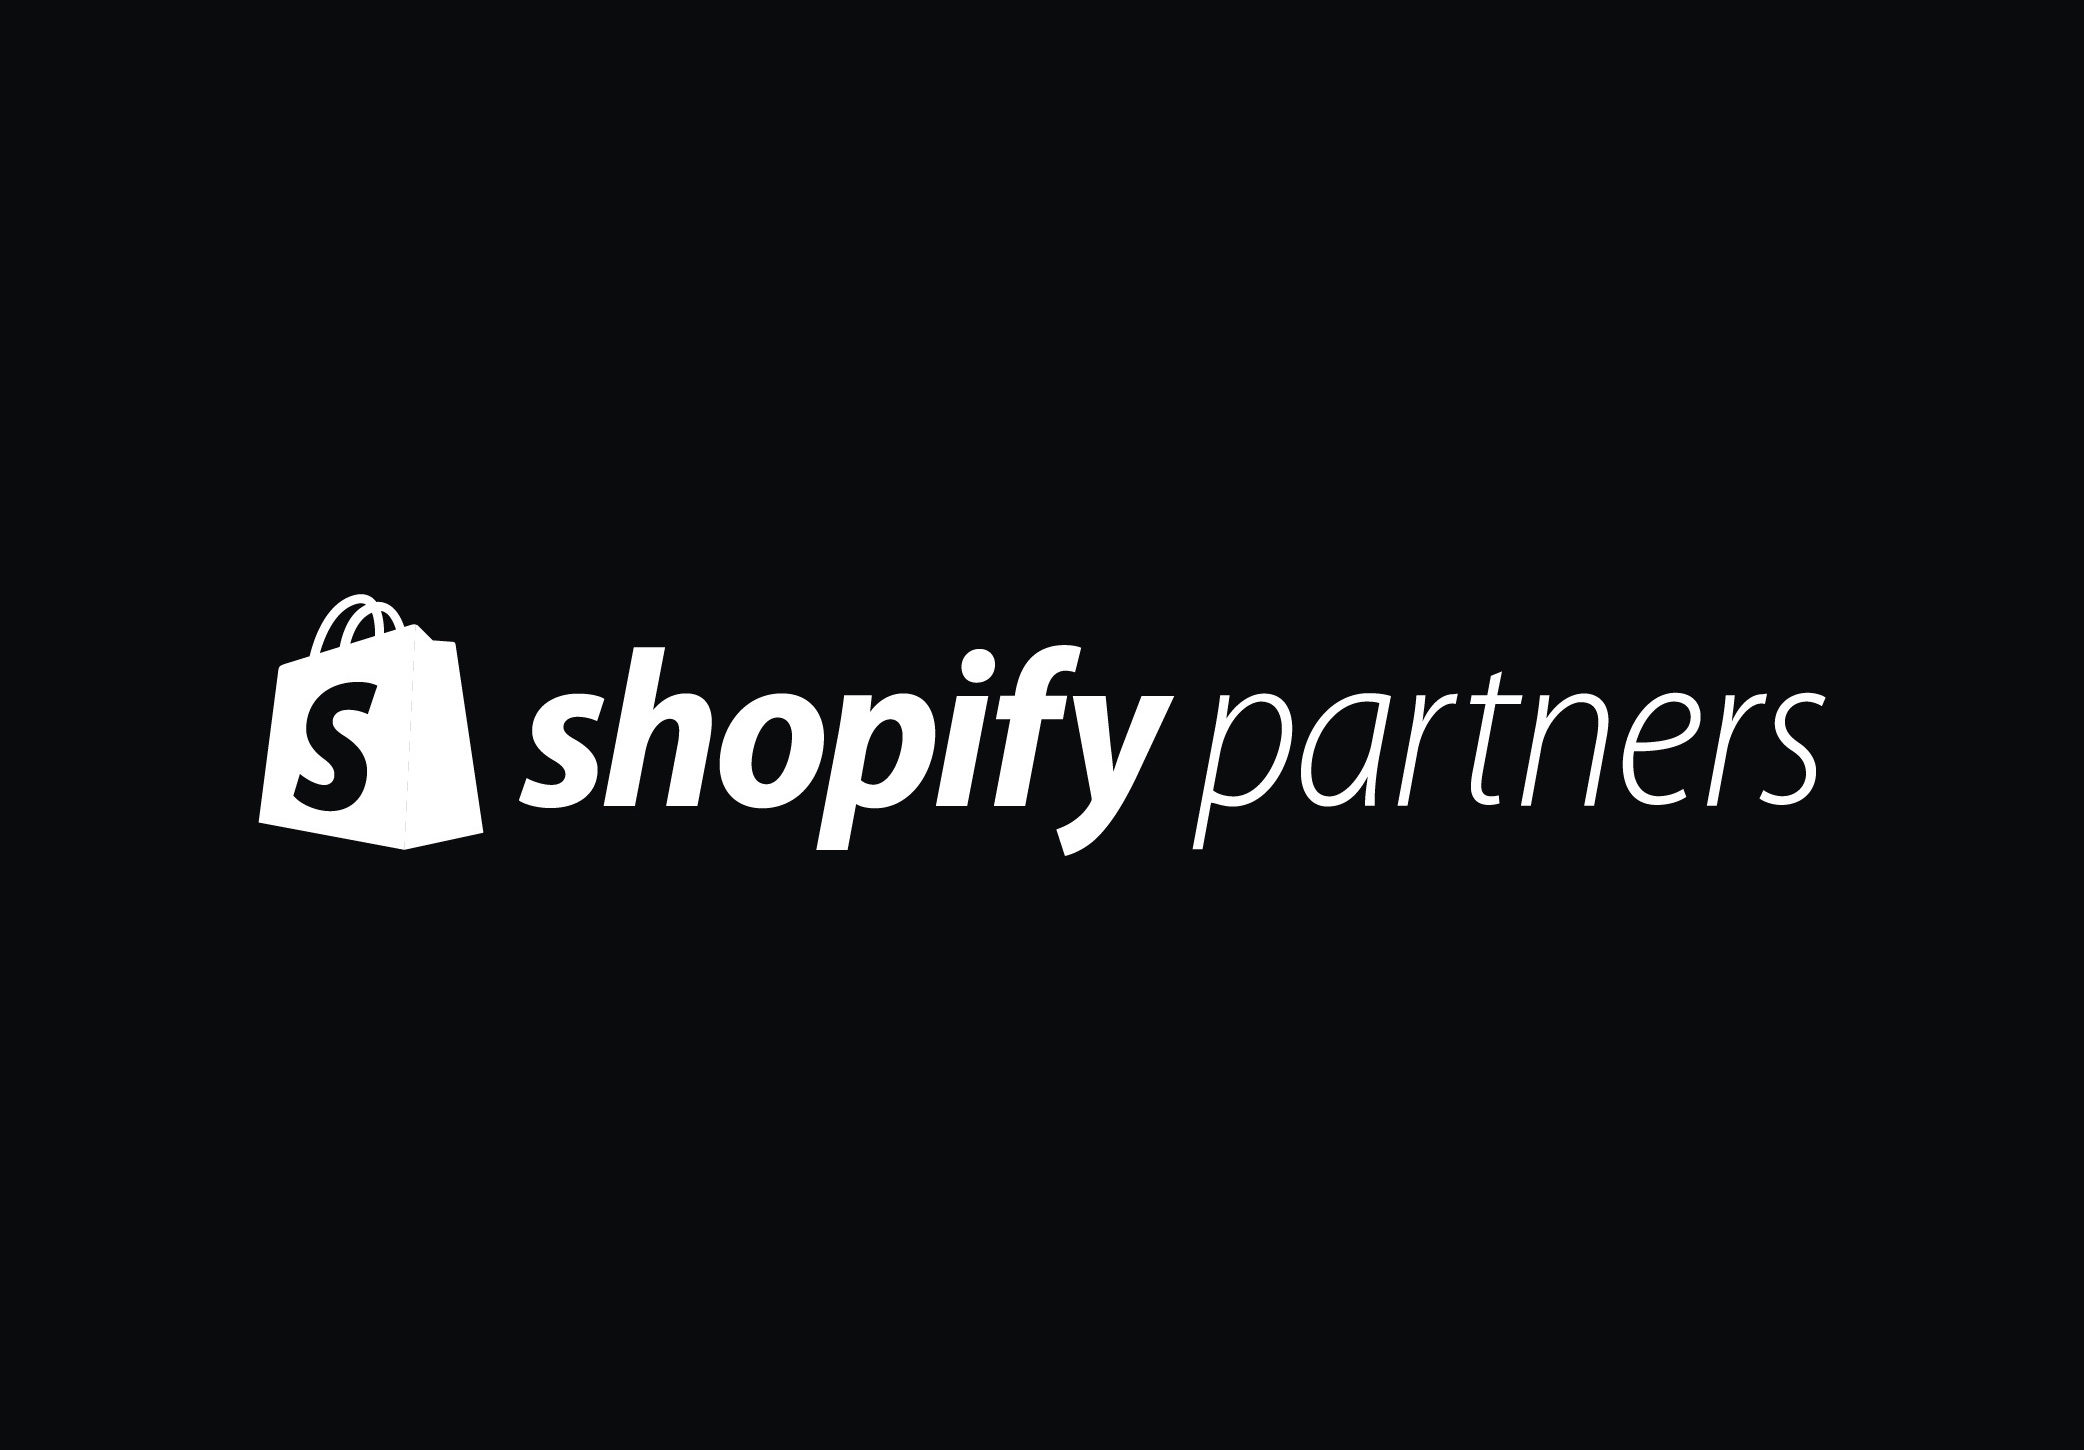 Shopify-Partners-1-aspect-ratio-670-466